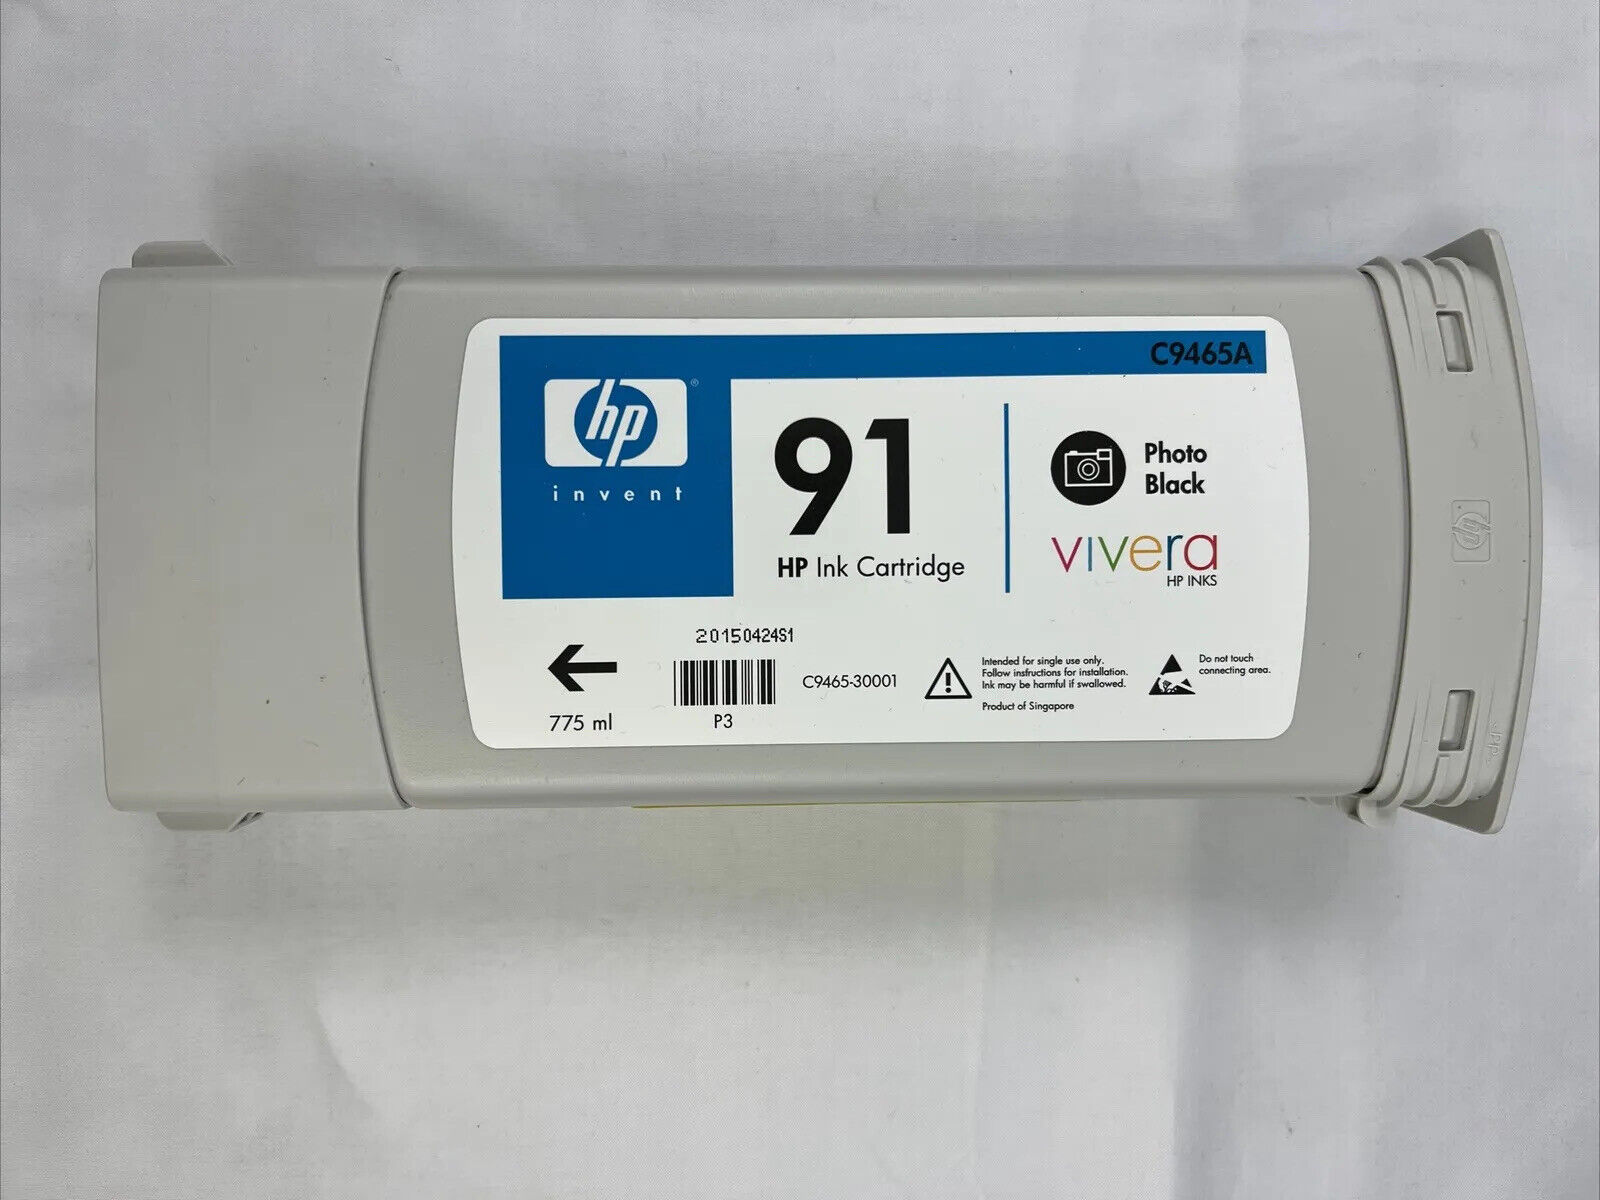 Genuine HP DesignJet 91 Photo Black 775ml Pigment Ink Cartridge C9465A Exp 2015